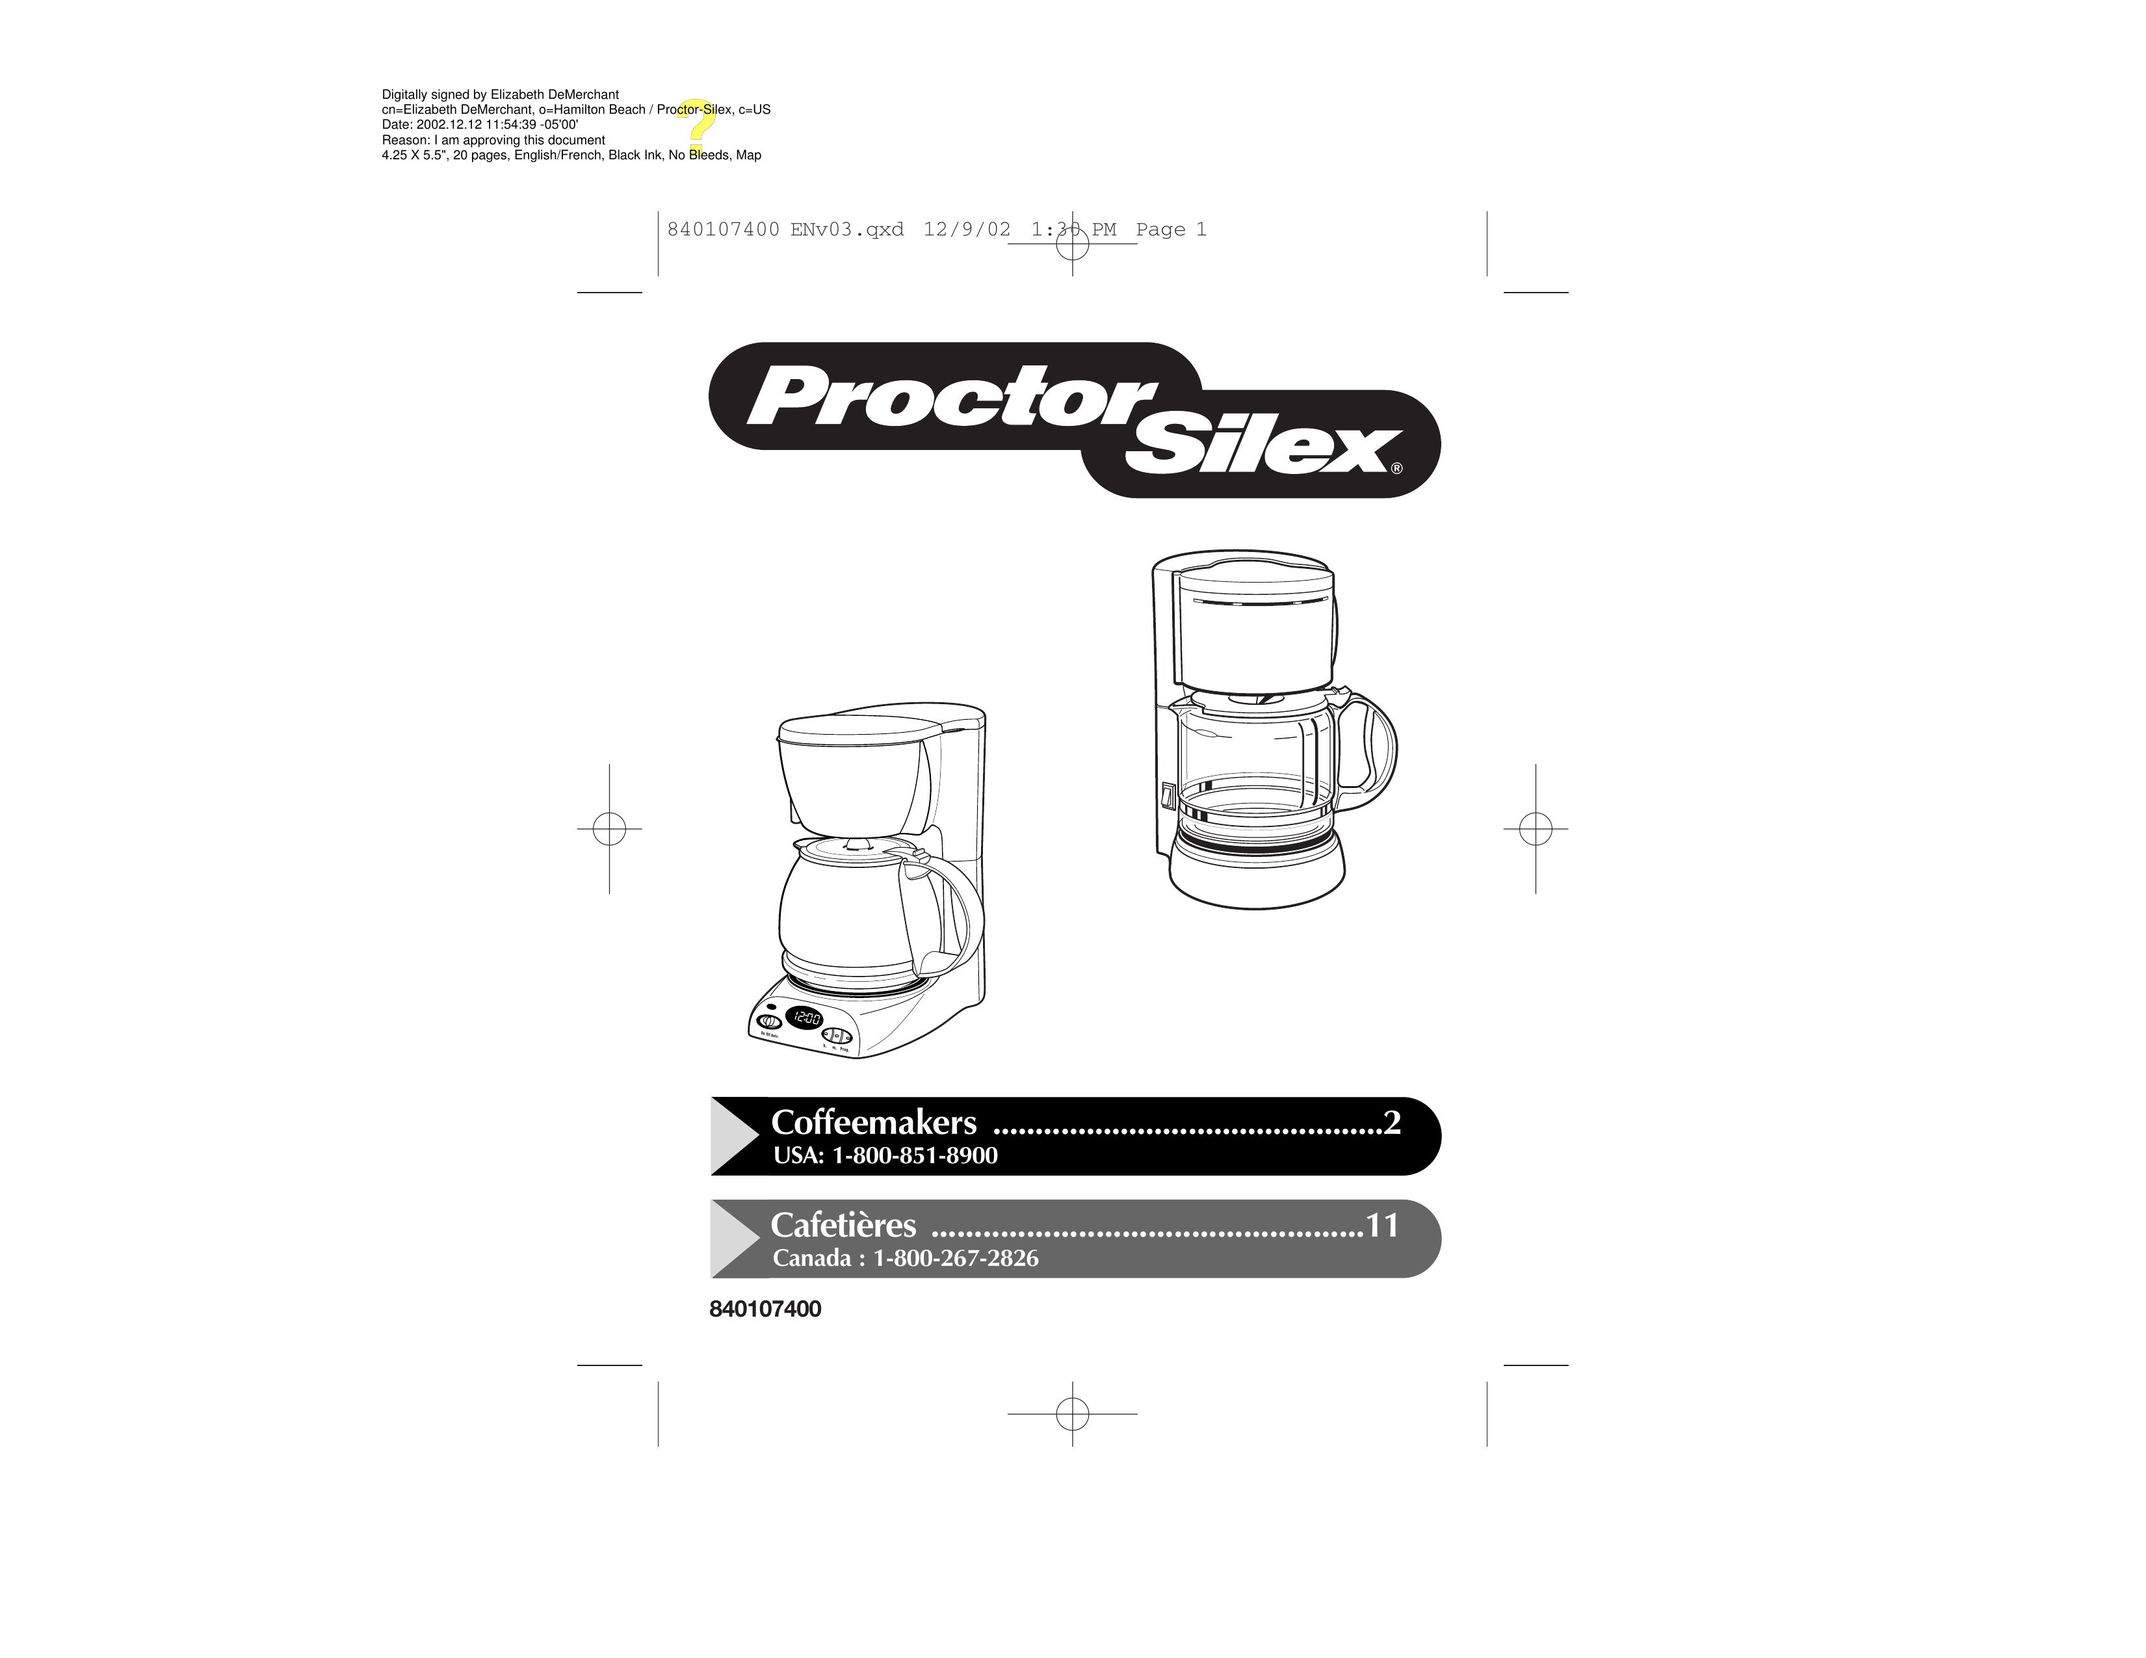 Proctor-Silex 840107400 Coffeemaker User Manual